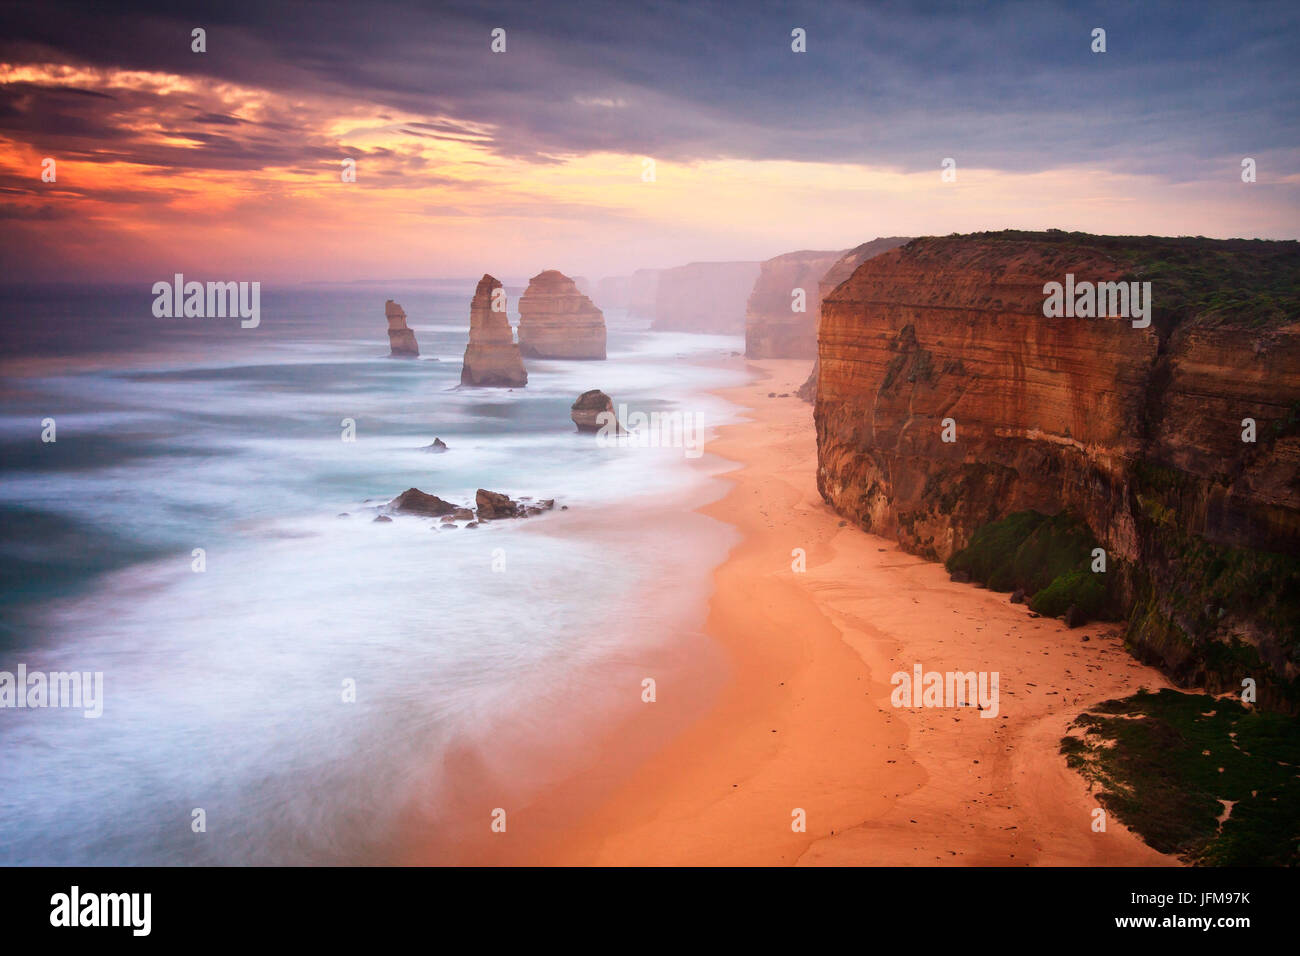 12 apôtres, la Great Ocean Road, Victoria en Australie Banque D'Images